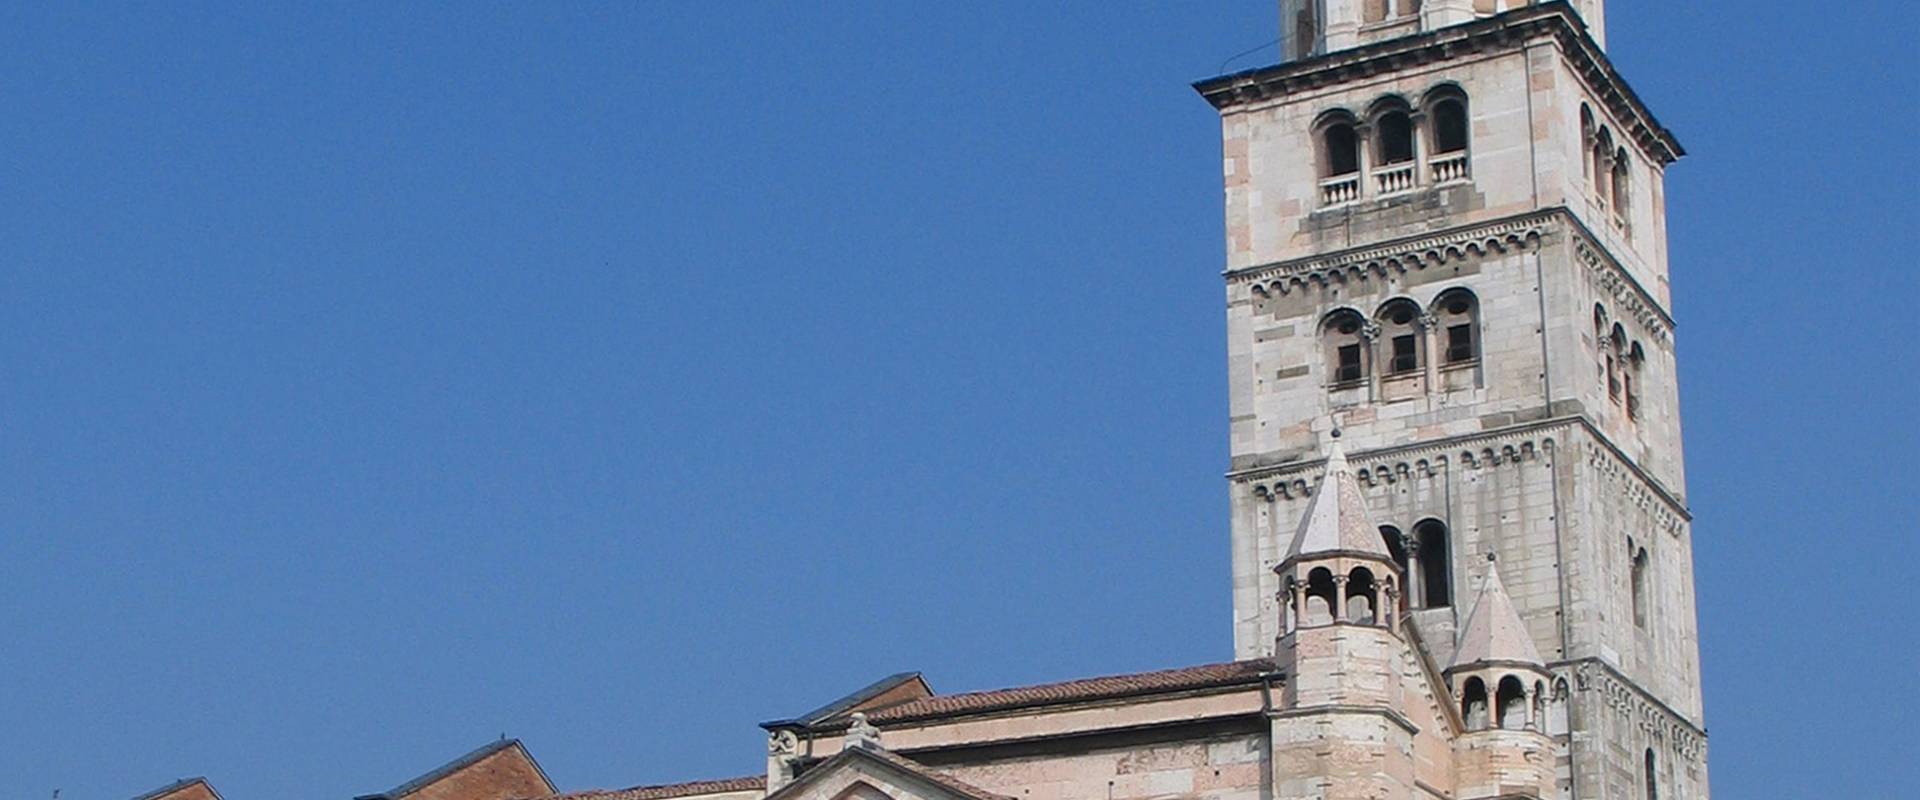 Emilia-Romagna Modena Duomo Abside e Ghirlandina foto di Biancamaria Rizzoli